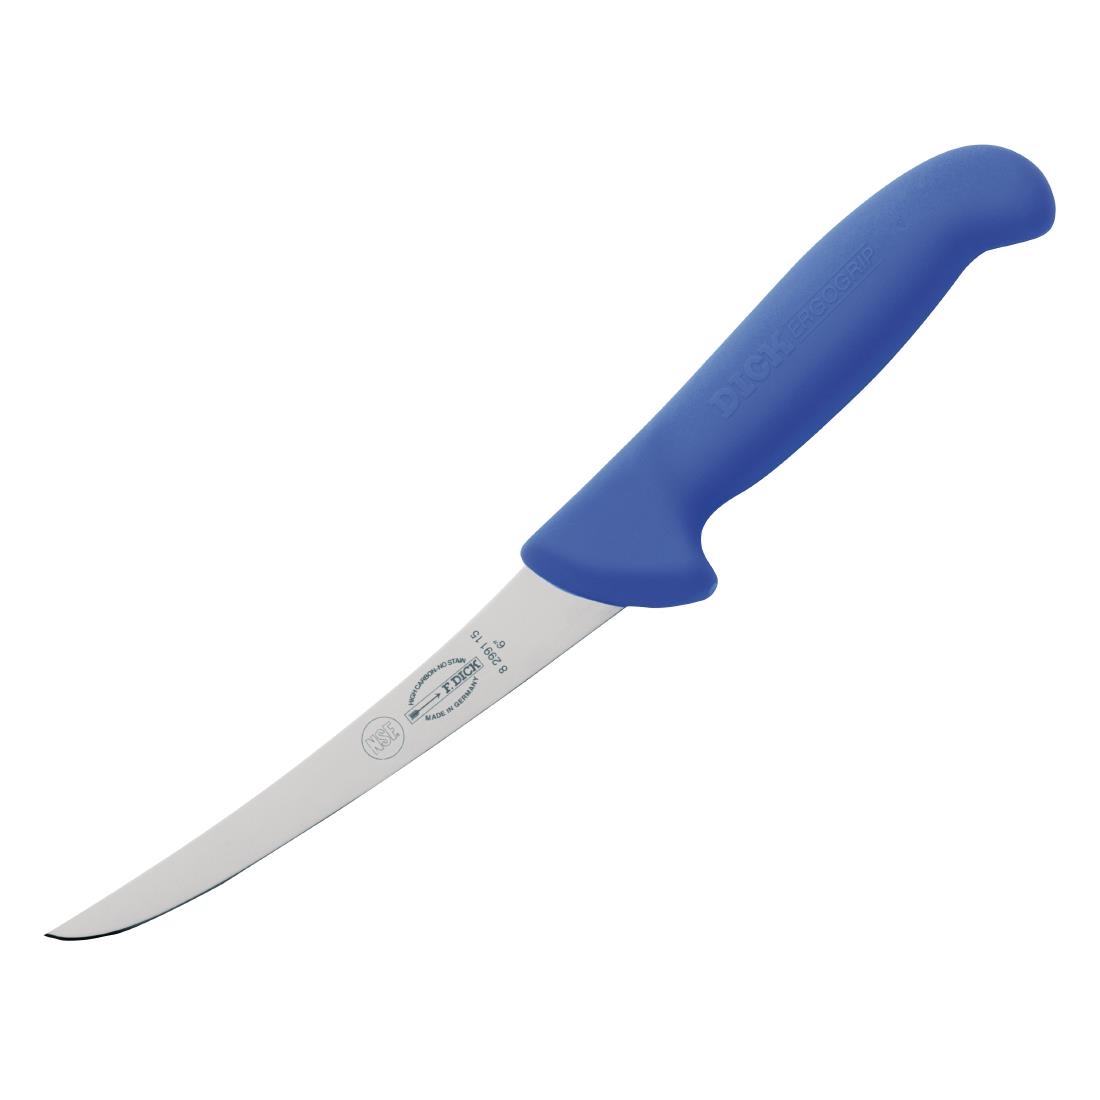 Dick Ergogrip Boning Knife Curved 6